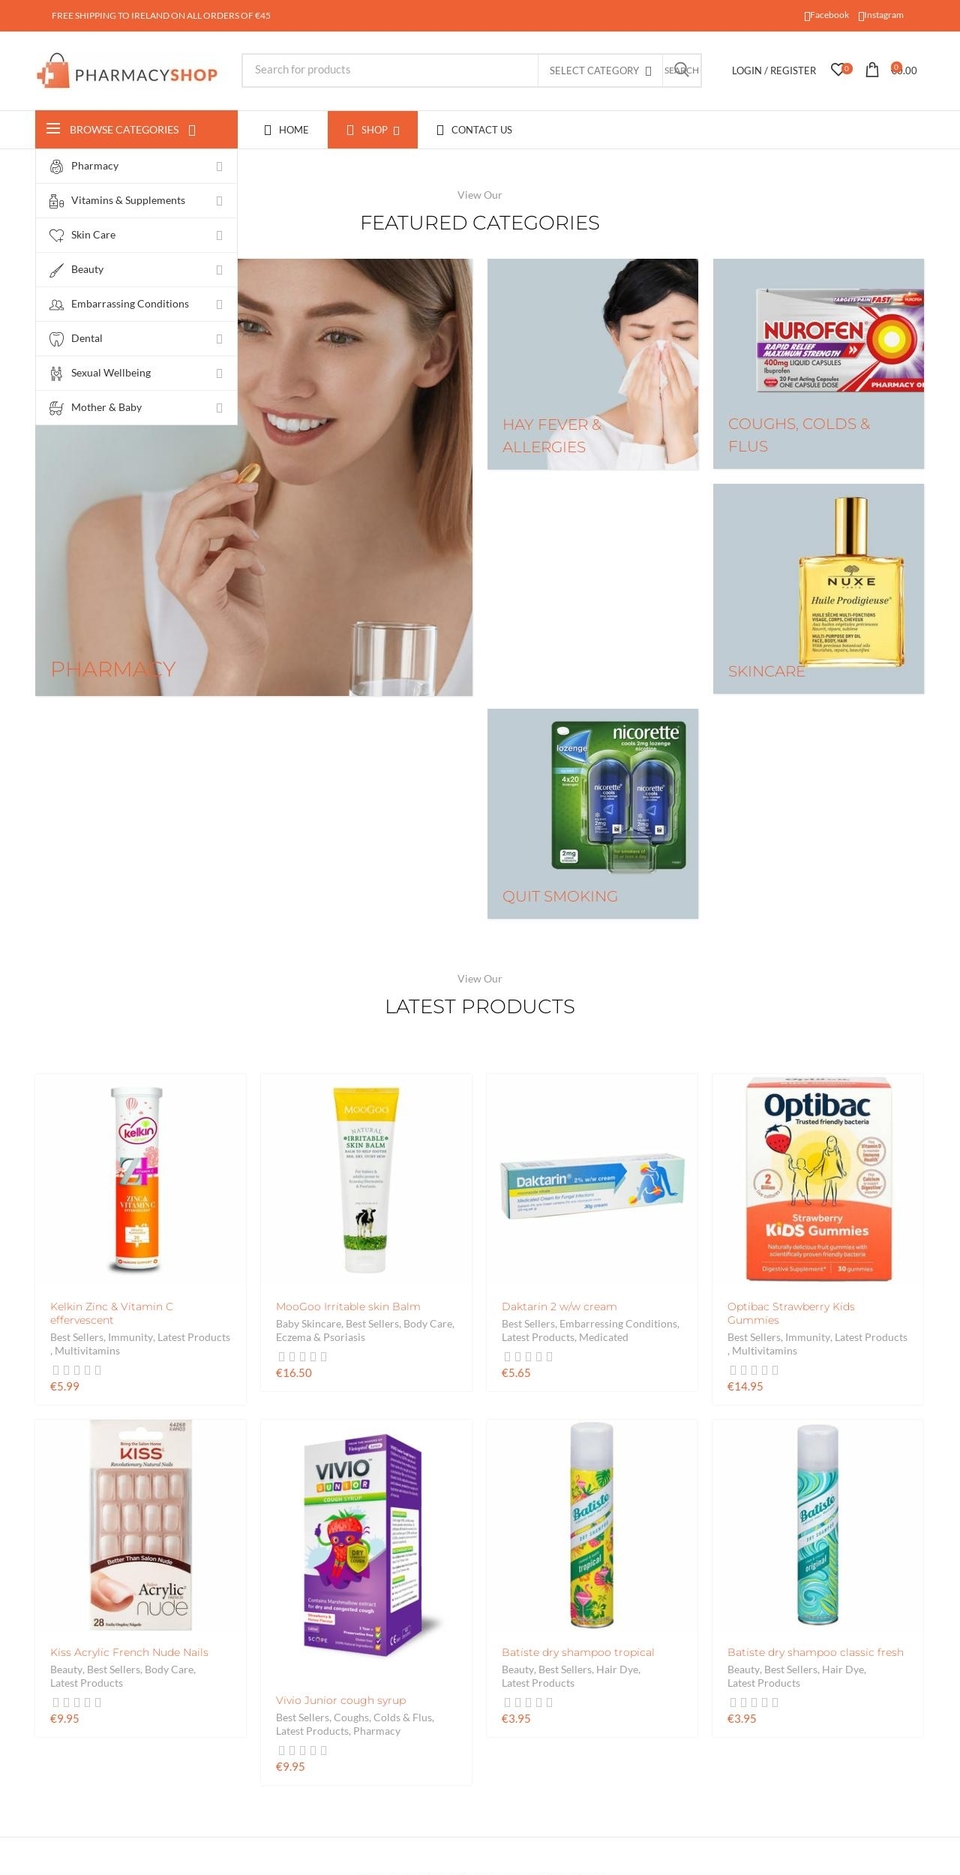 pharmacyshop.ie shopify website screenshot